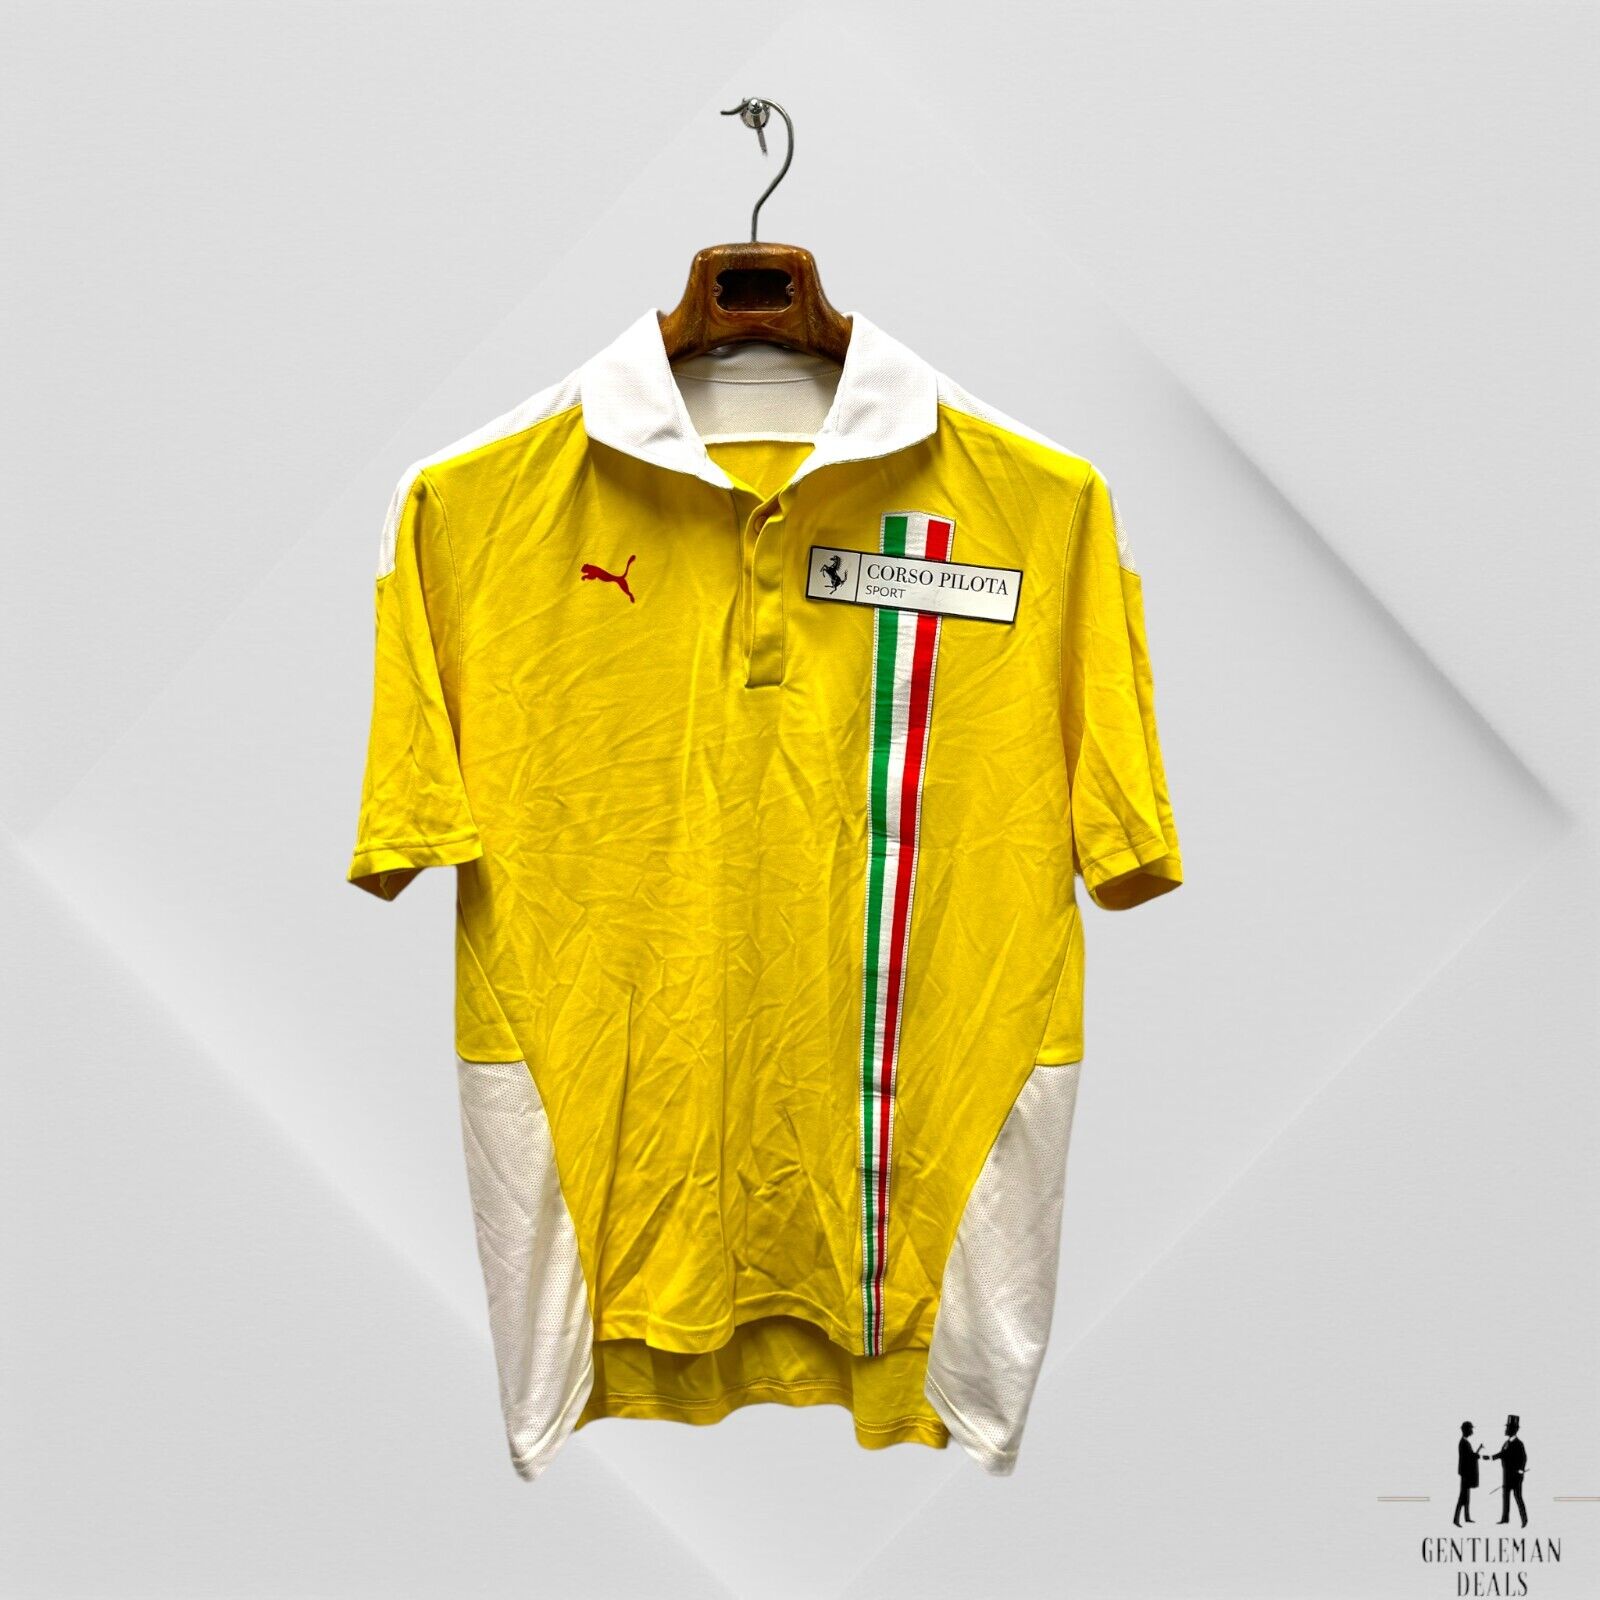 Ferrari Puma Corso Pilota Sport Polo Shirt T size L 52 54 Official Product Large